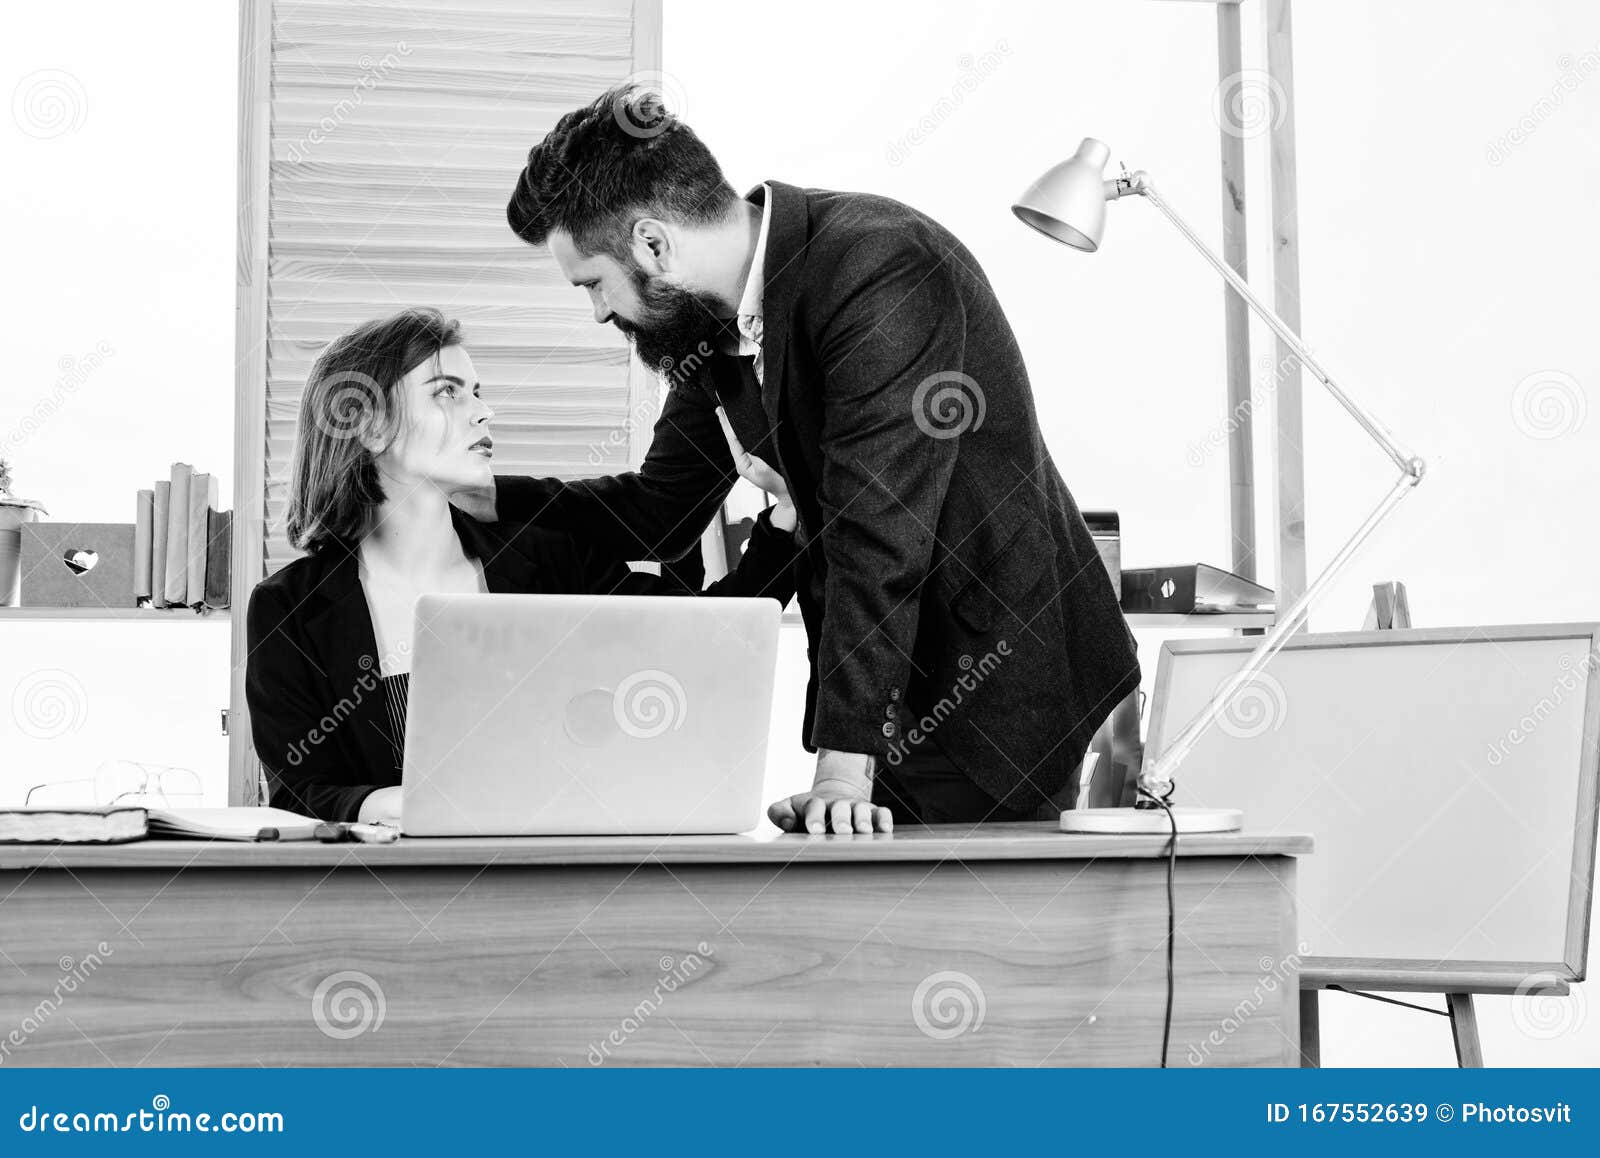 Kribbeln im Büro - Flirten am Arbeitsplatz